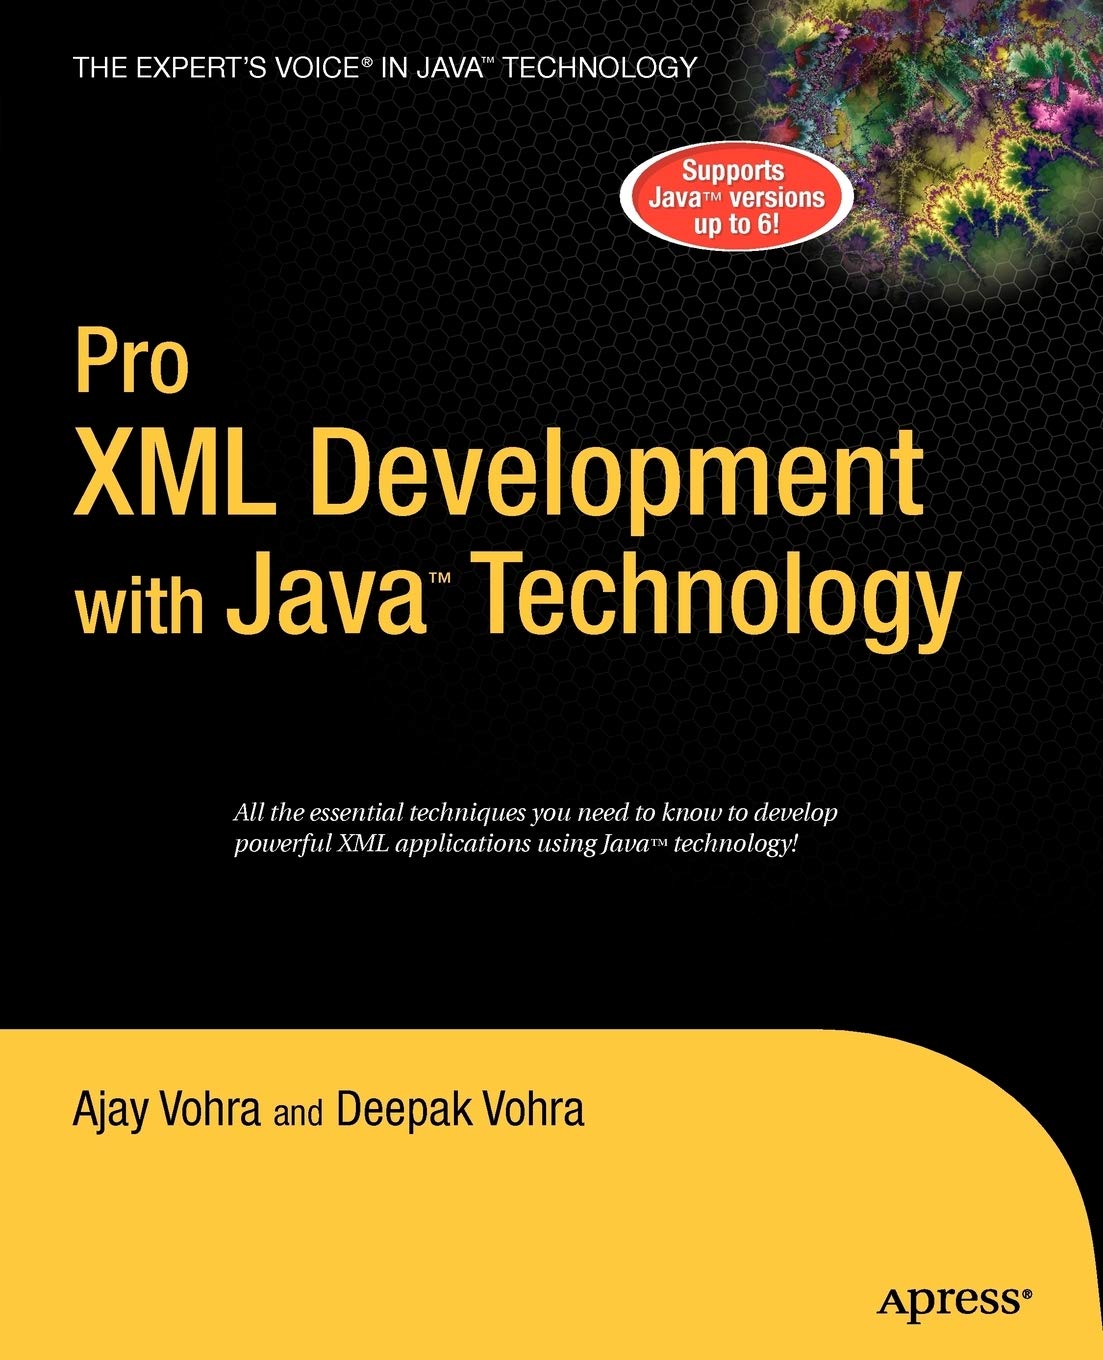 Pro XML Development with Java Technology by Ajay Vohra